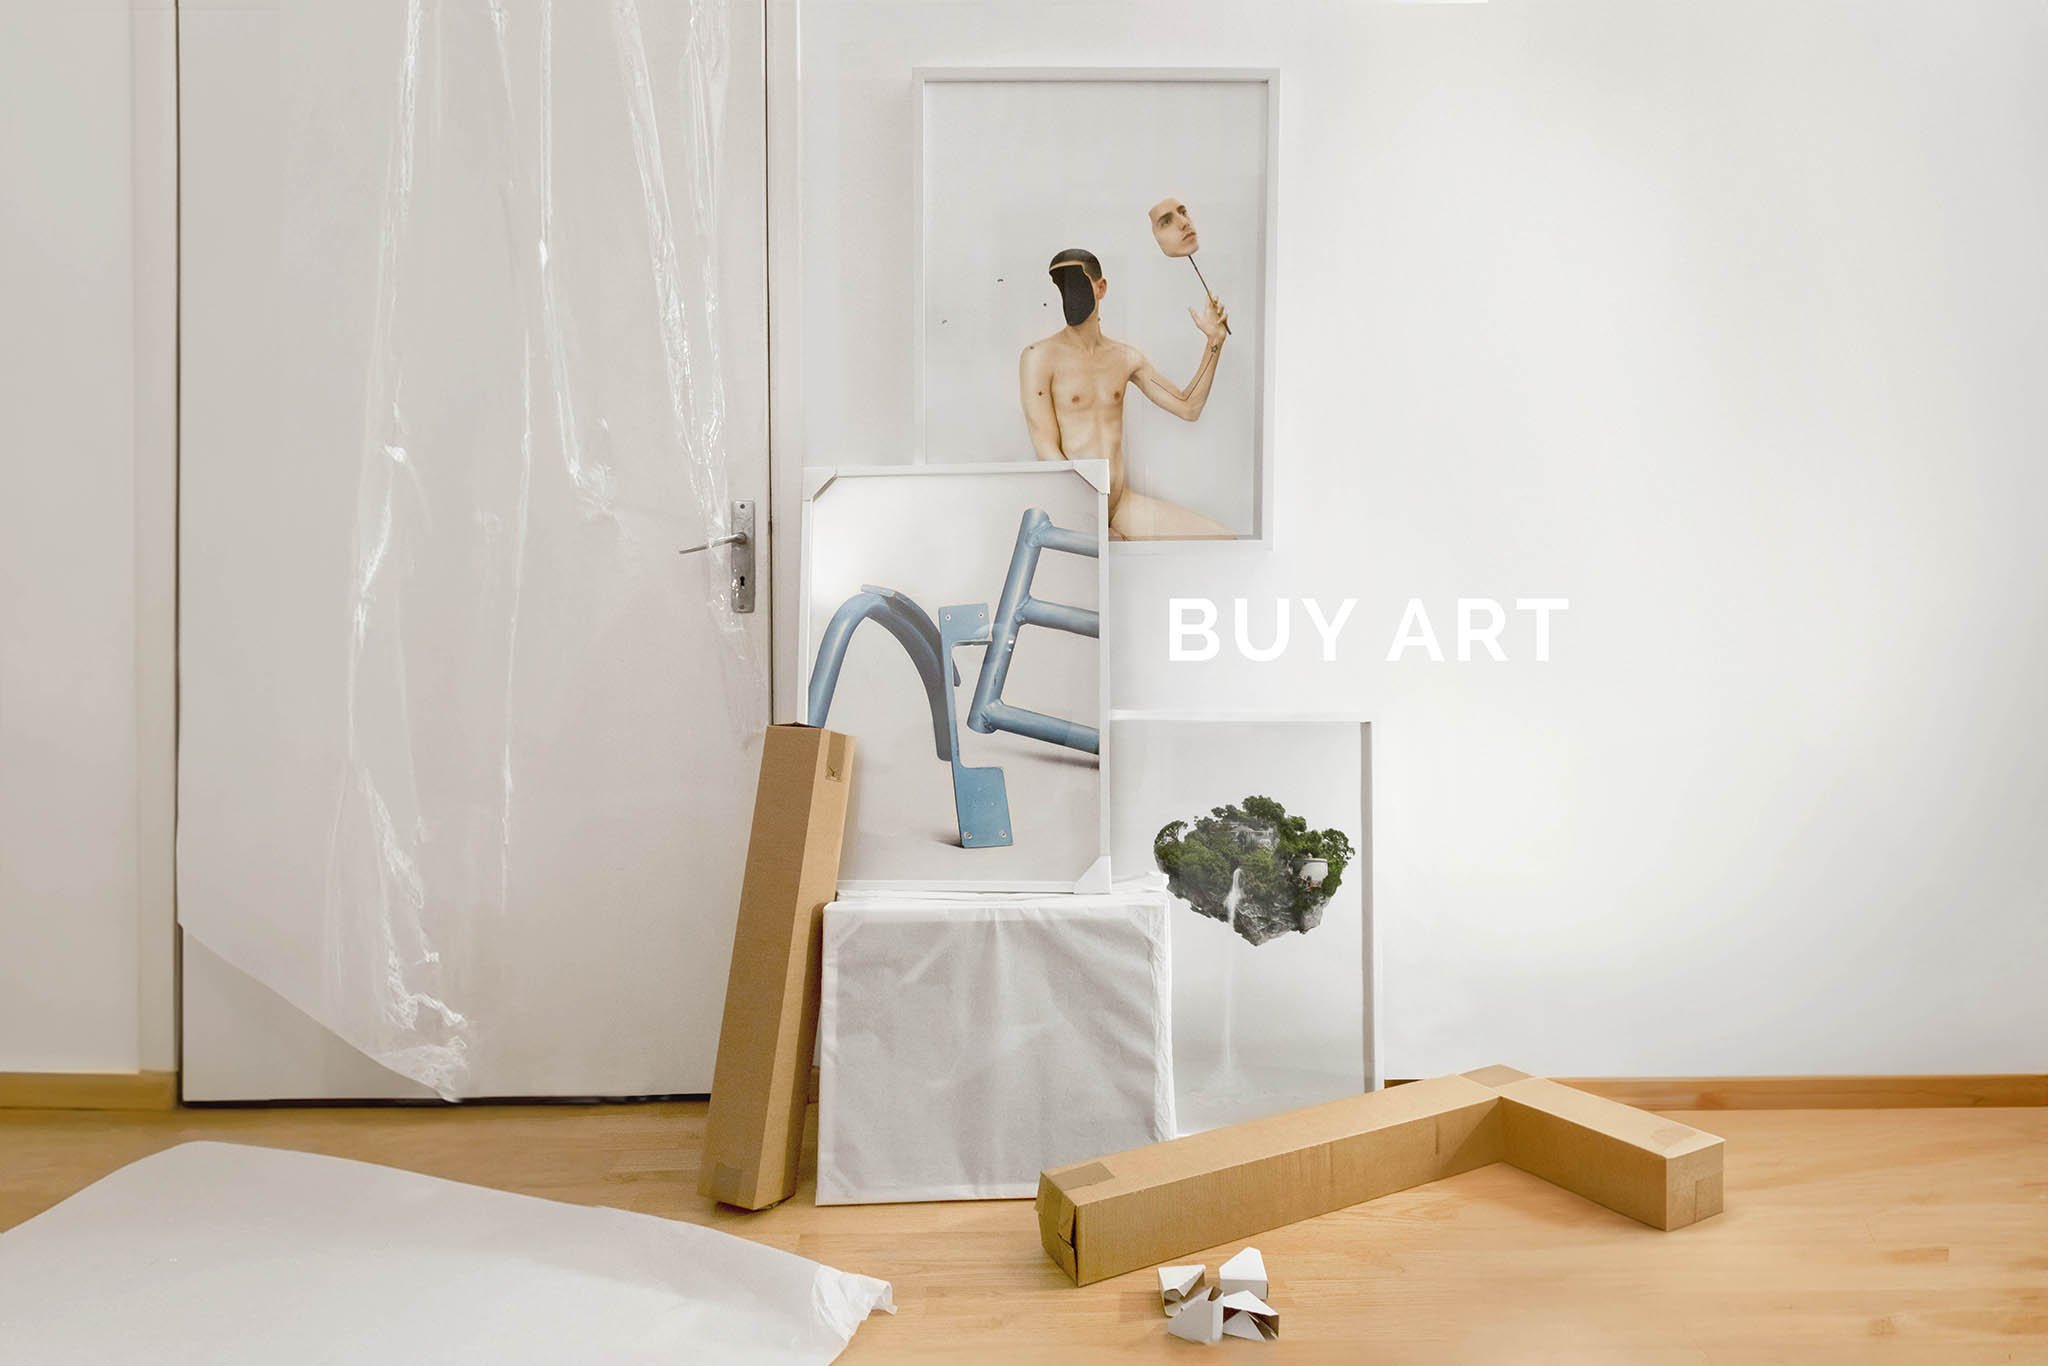 Buy ART 